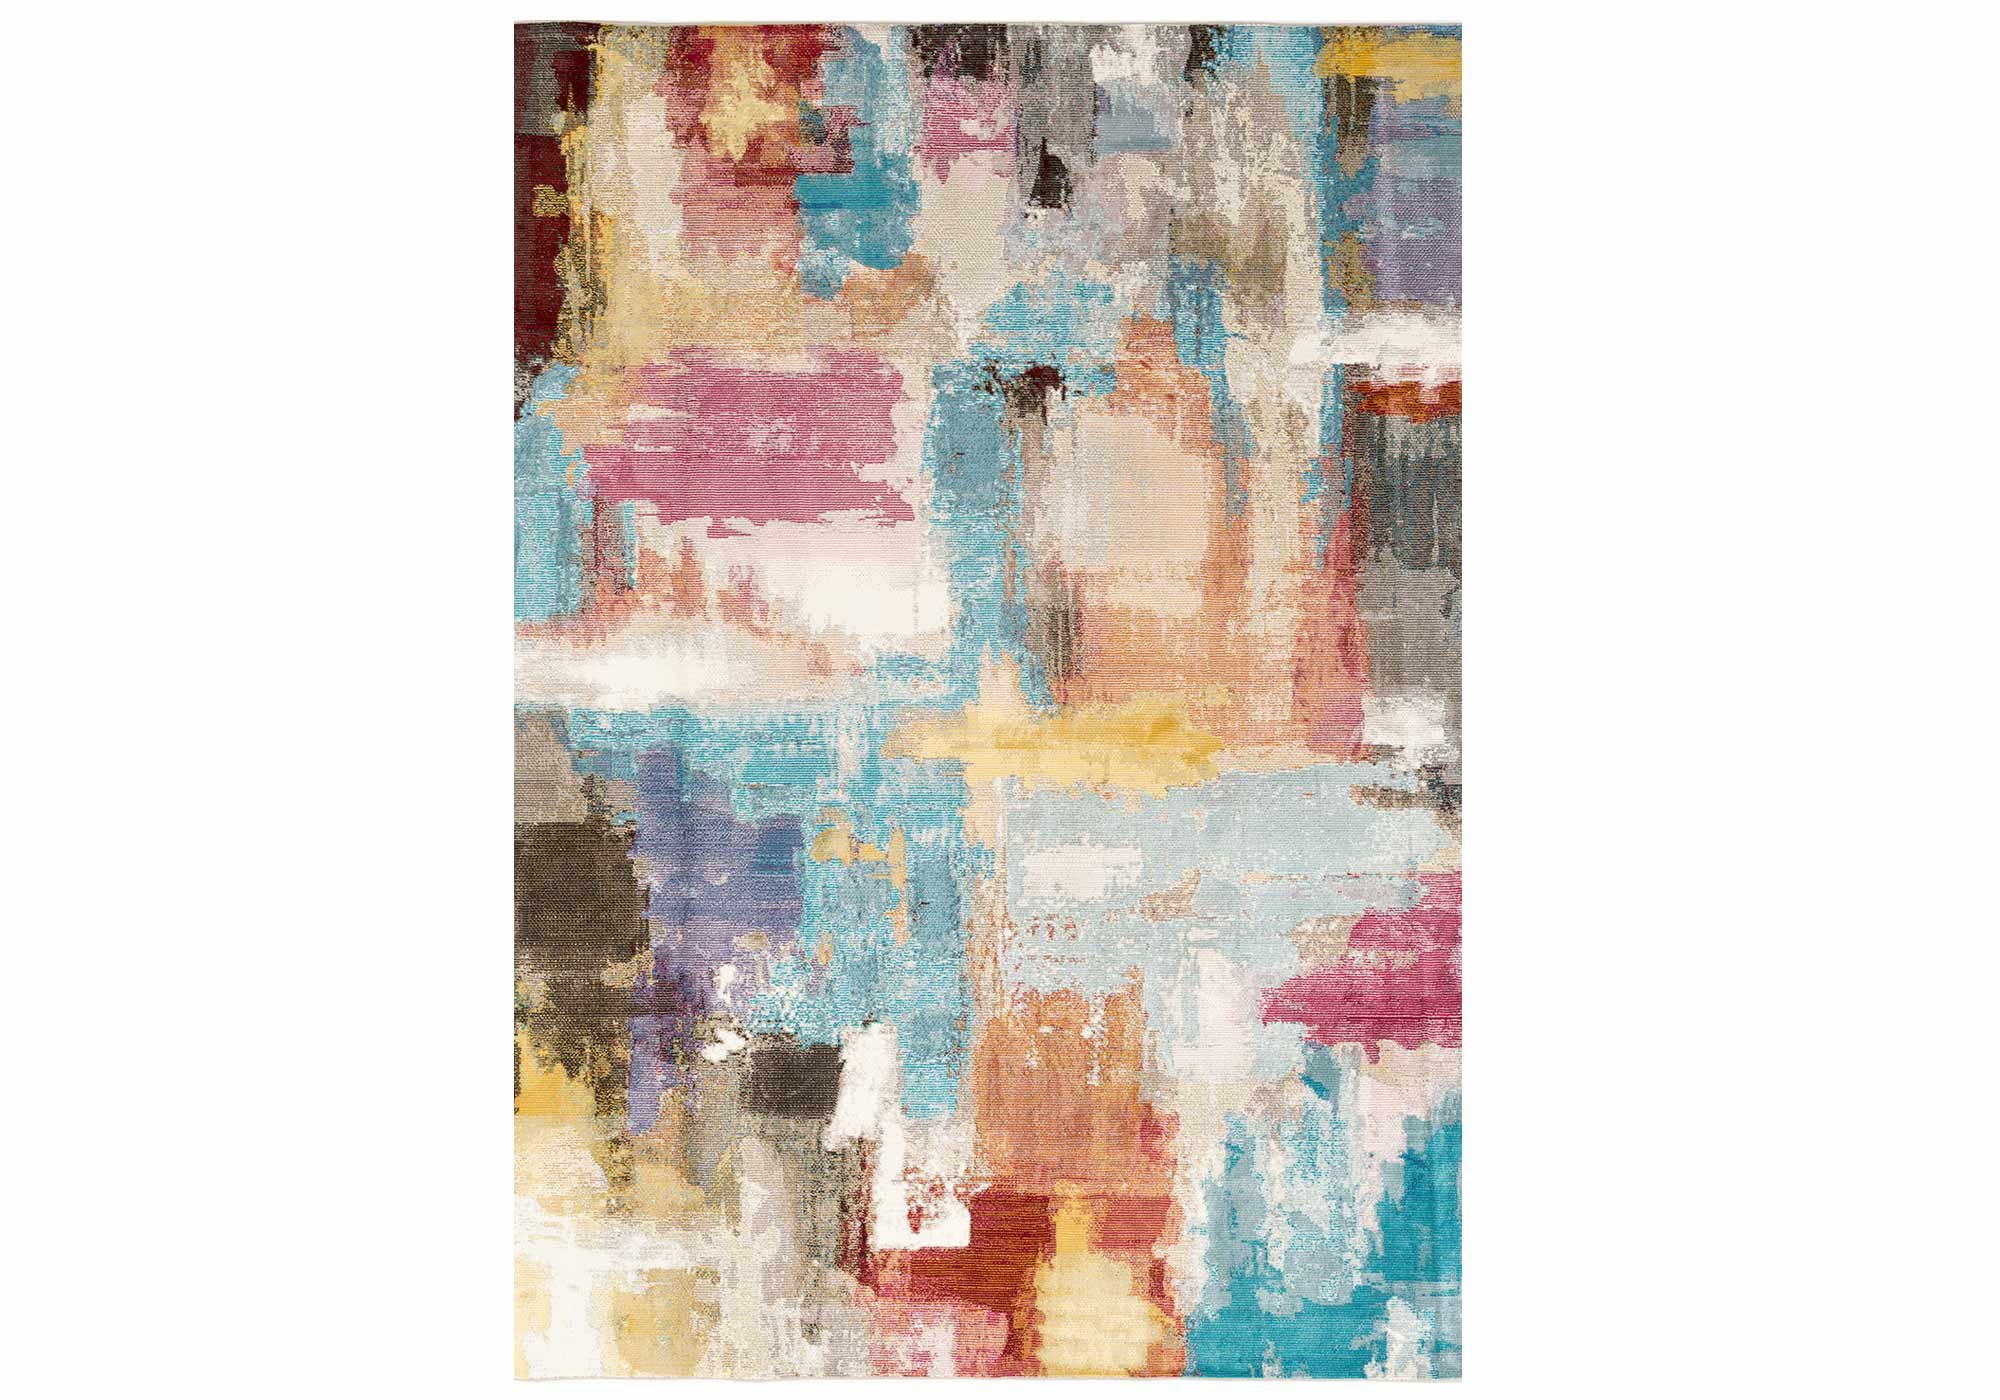 Festival Teppich 200 x 290 cm - mehrfarbig - 6 mm Höhe - Picasso 598